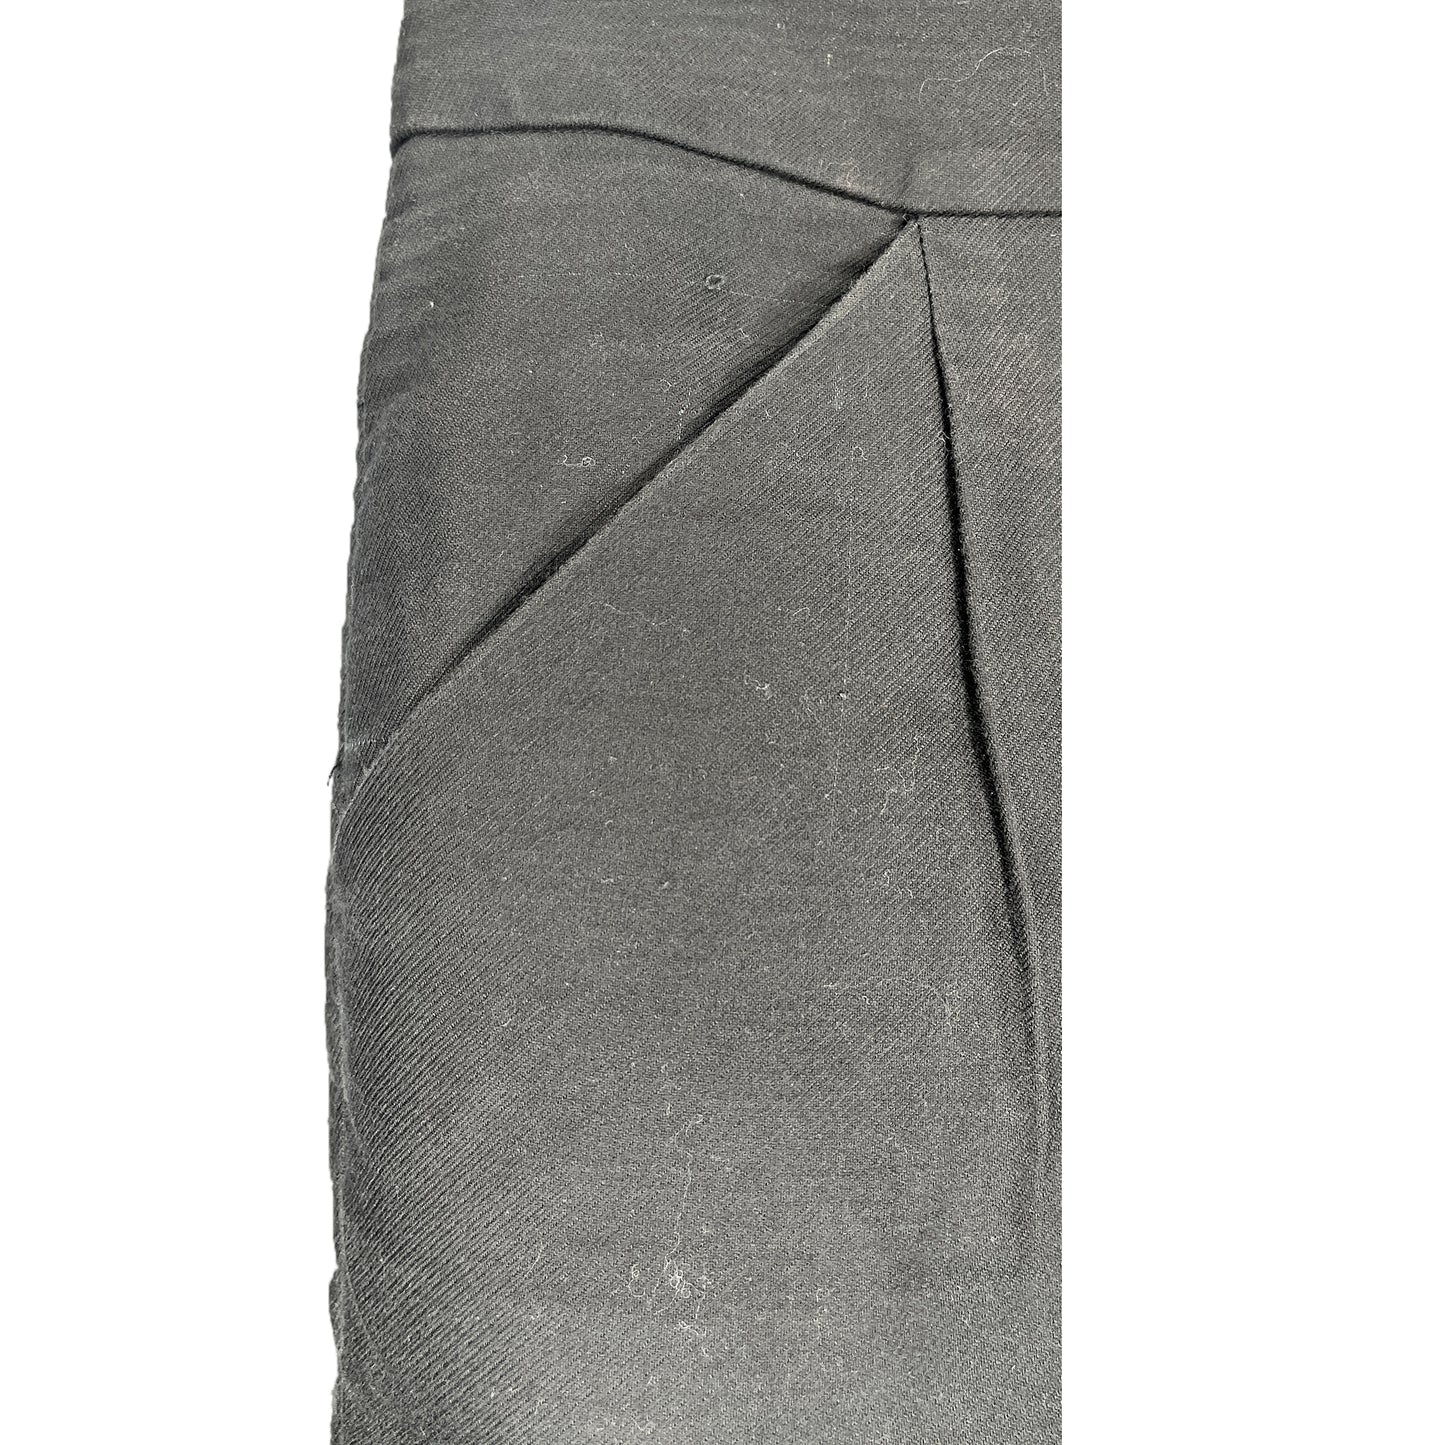 J Crew Pencil Skirt Above-Knee Black Size 6 SKU 000417